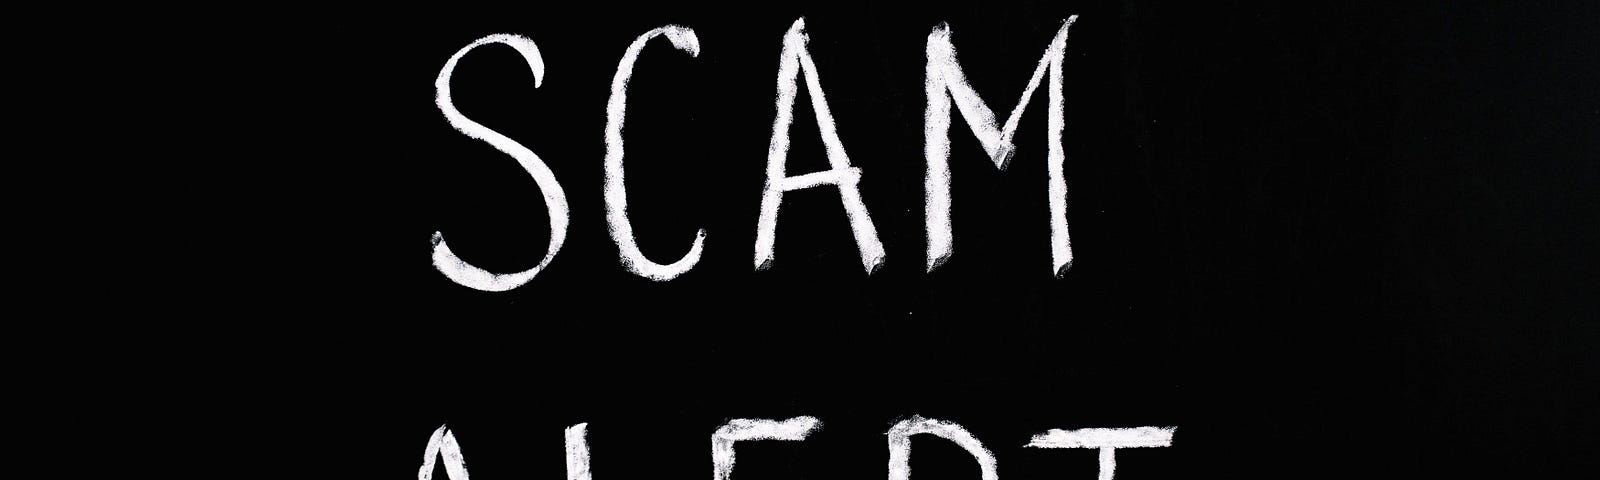 Words ‘scam alert’ on a black background